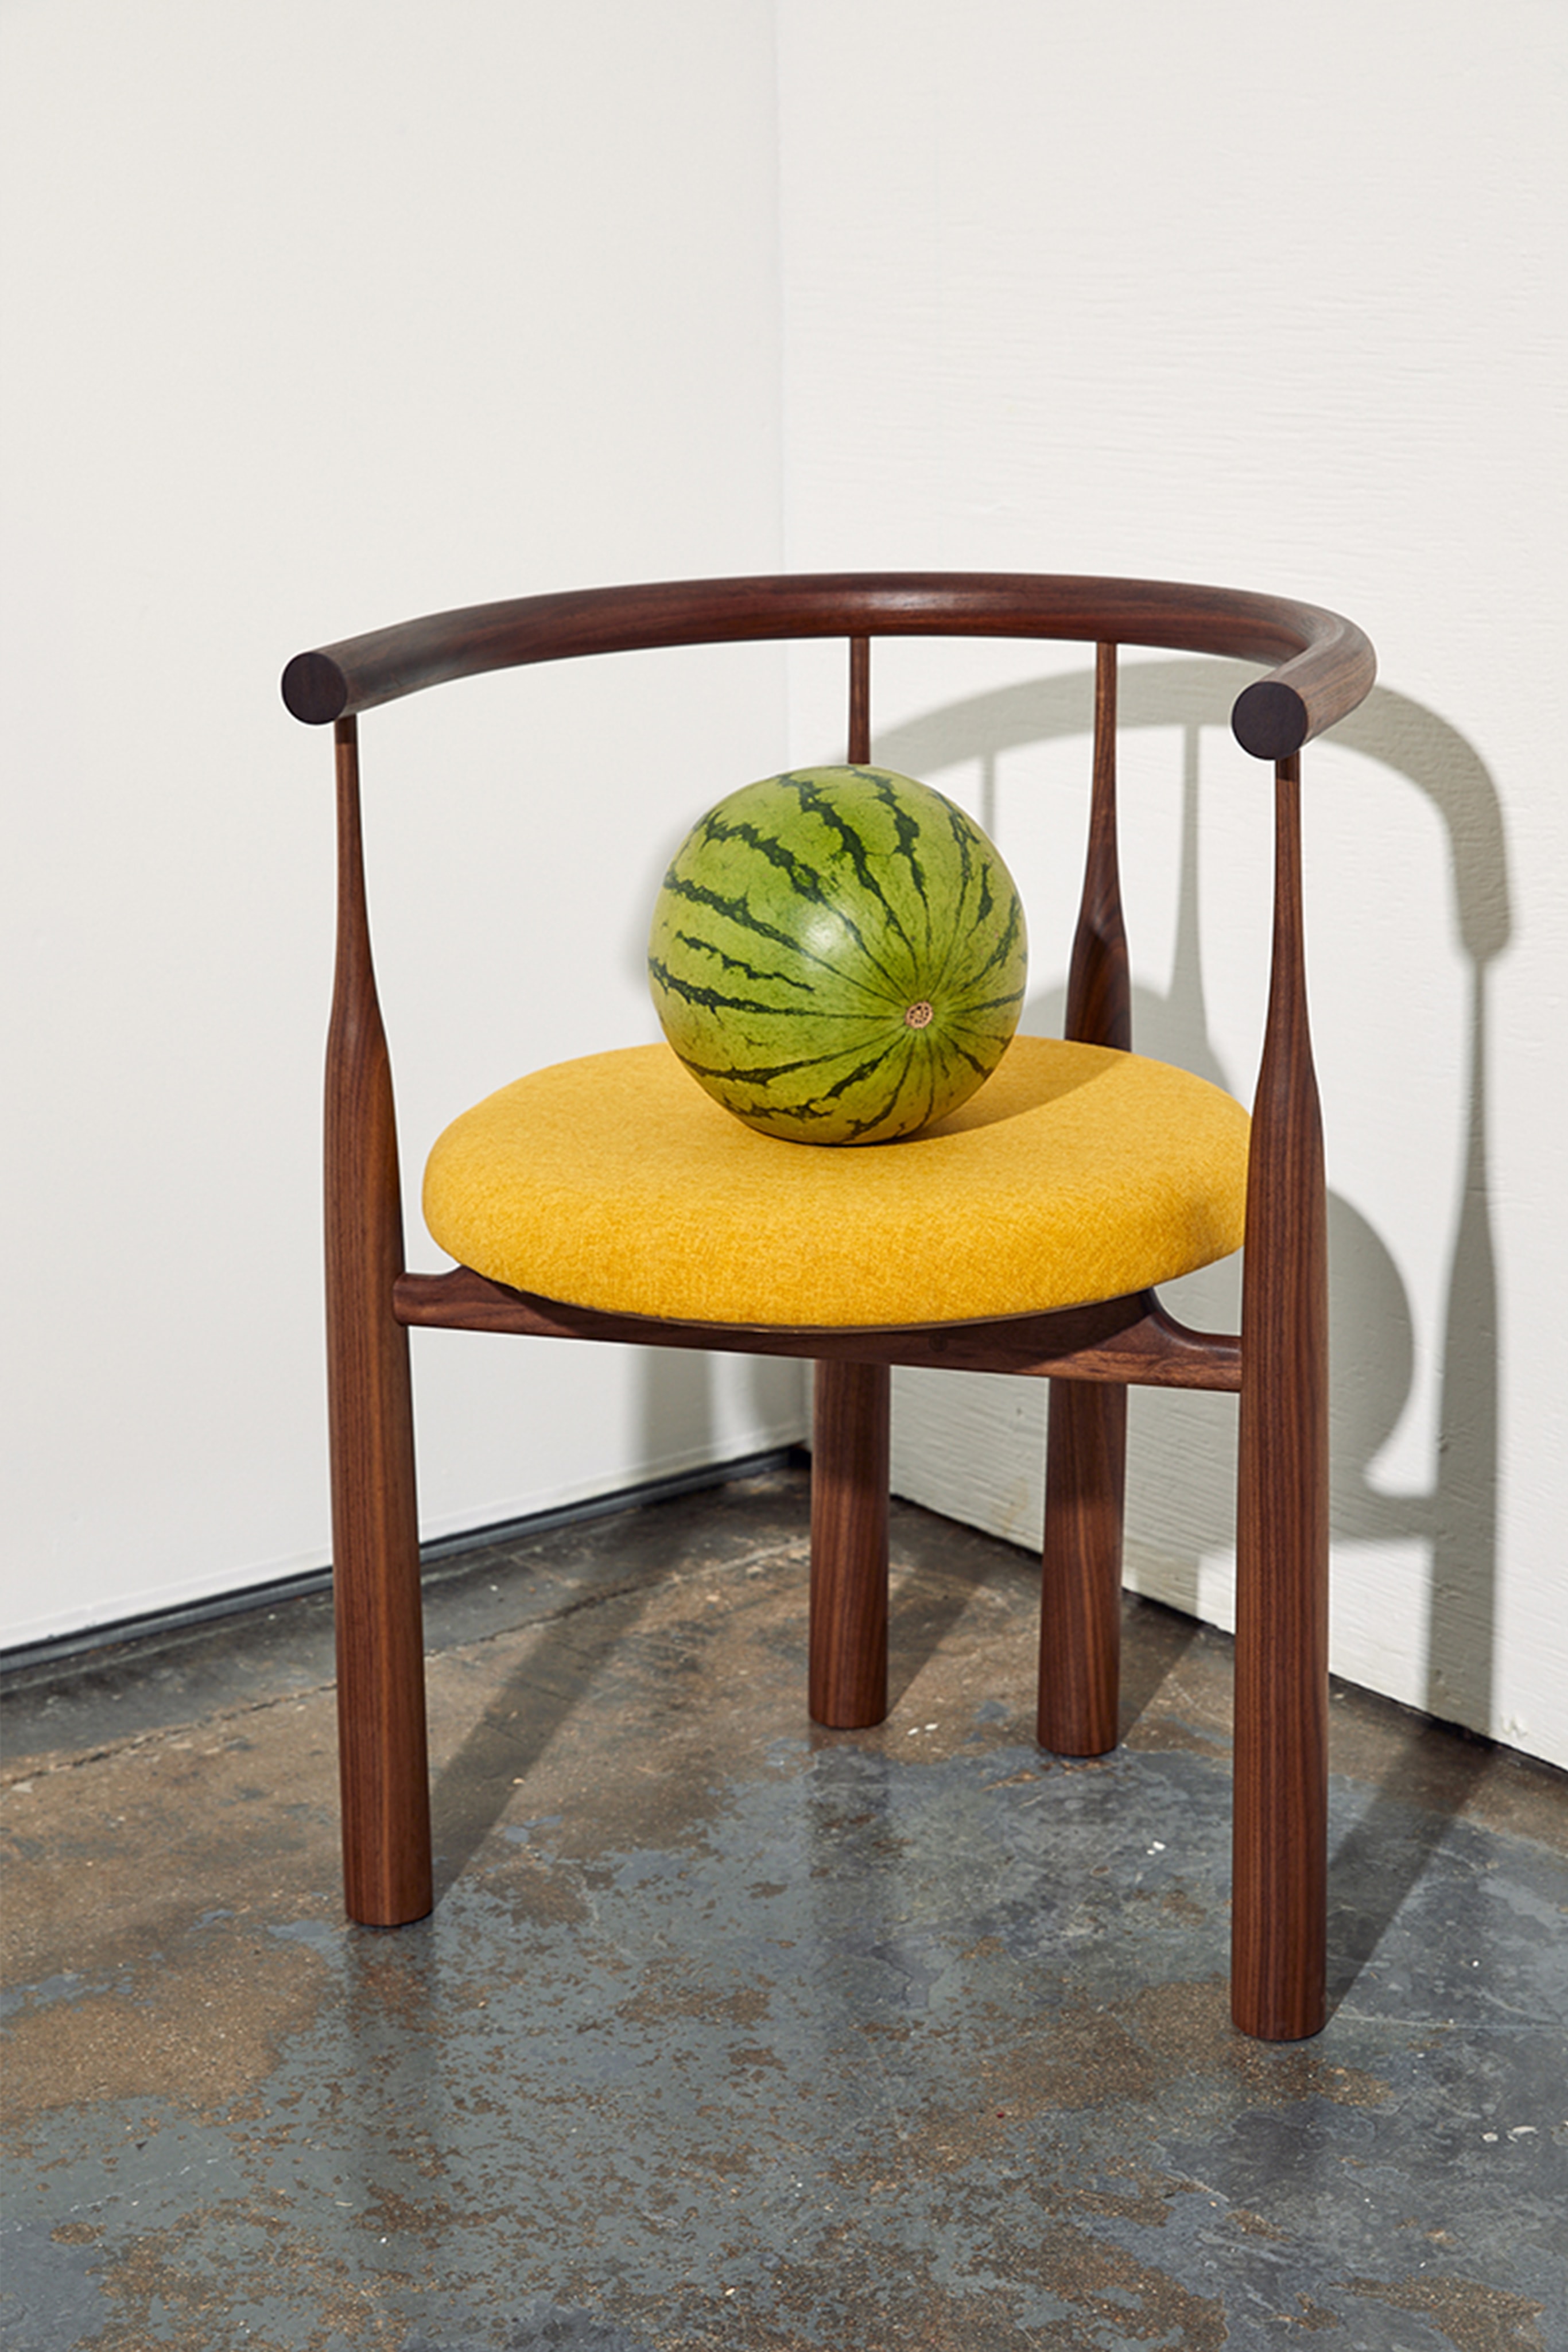 Steven bukow new bold sculptural pieces furniture